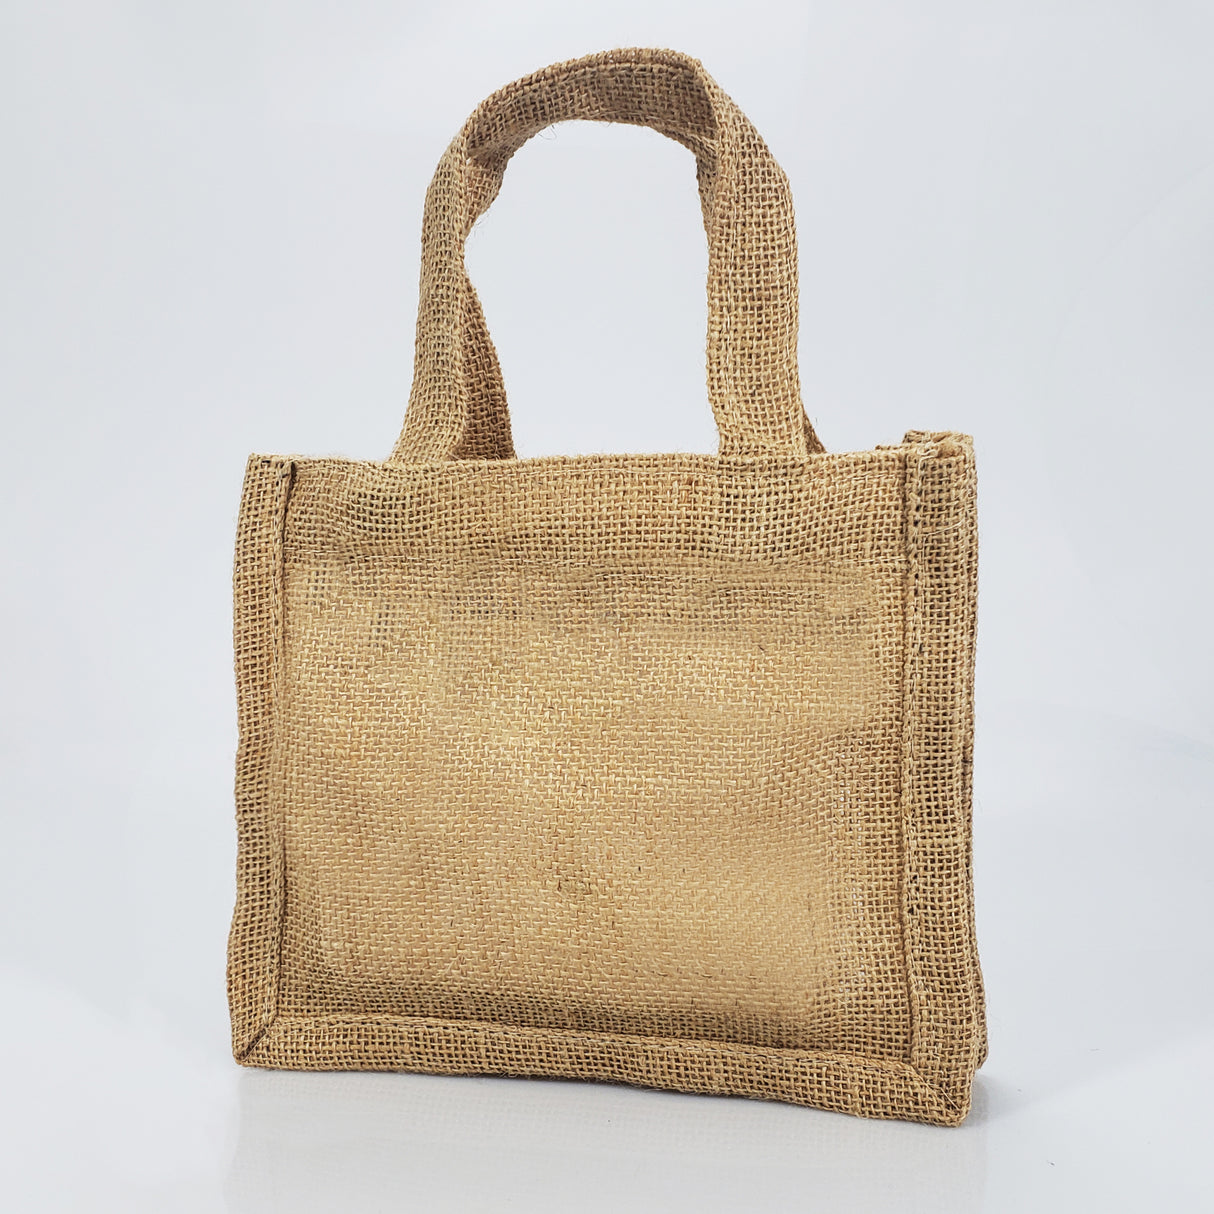 durable jute burlap bag for promotional use